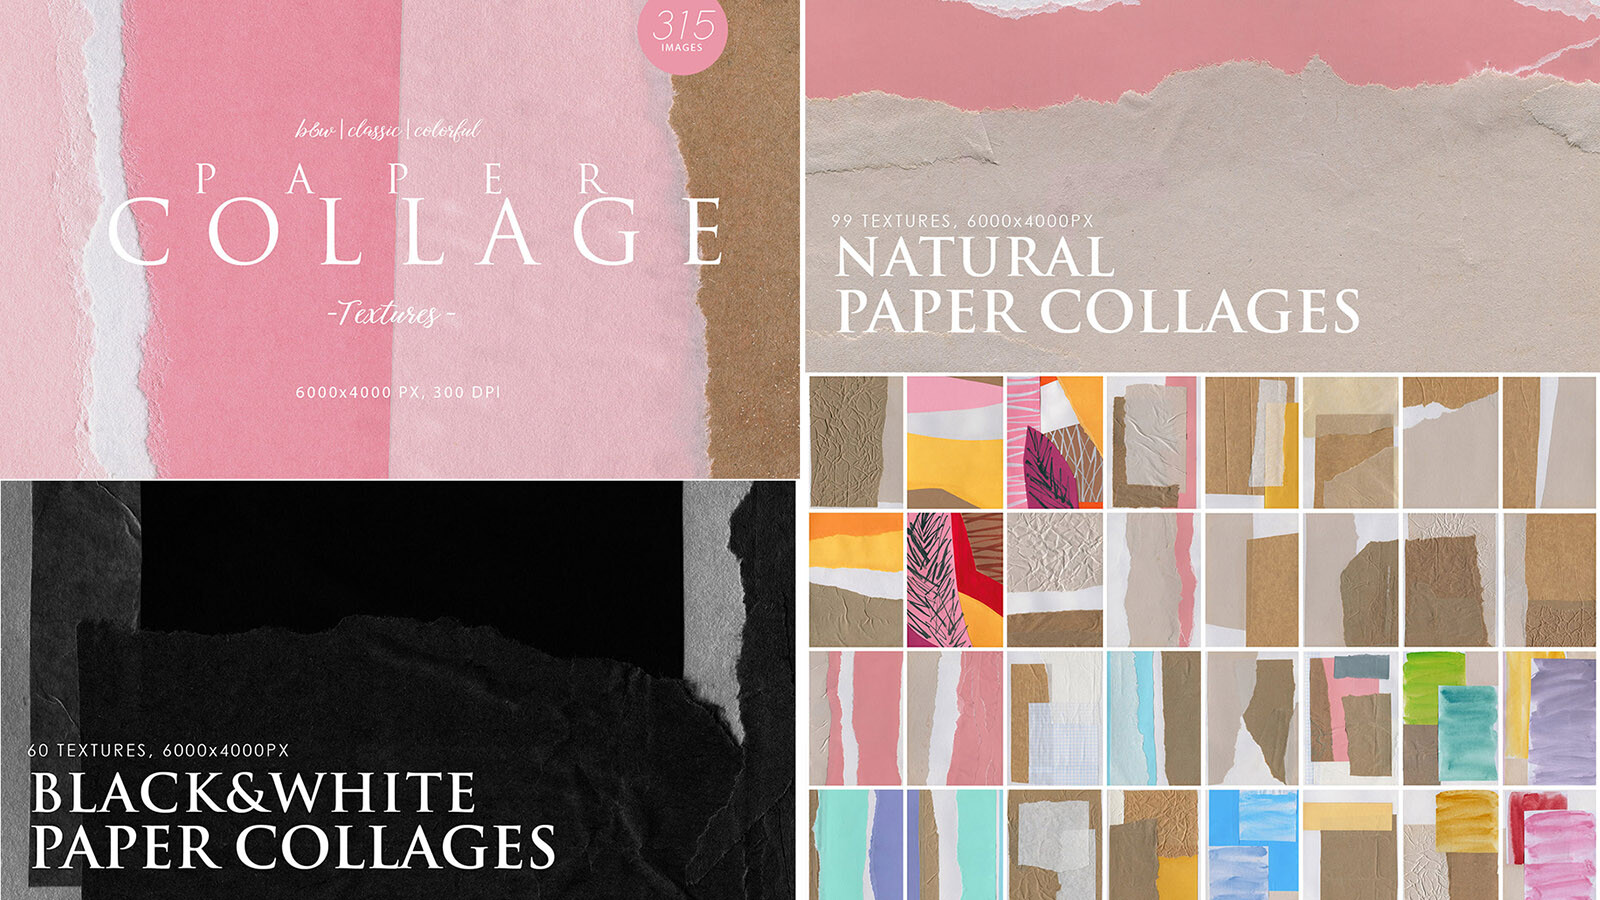 391 Vintage Paper Textures